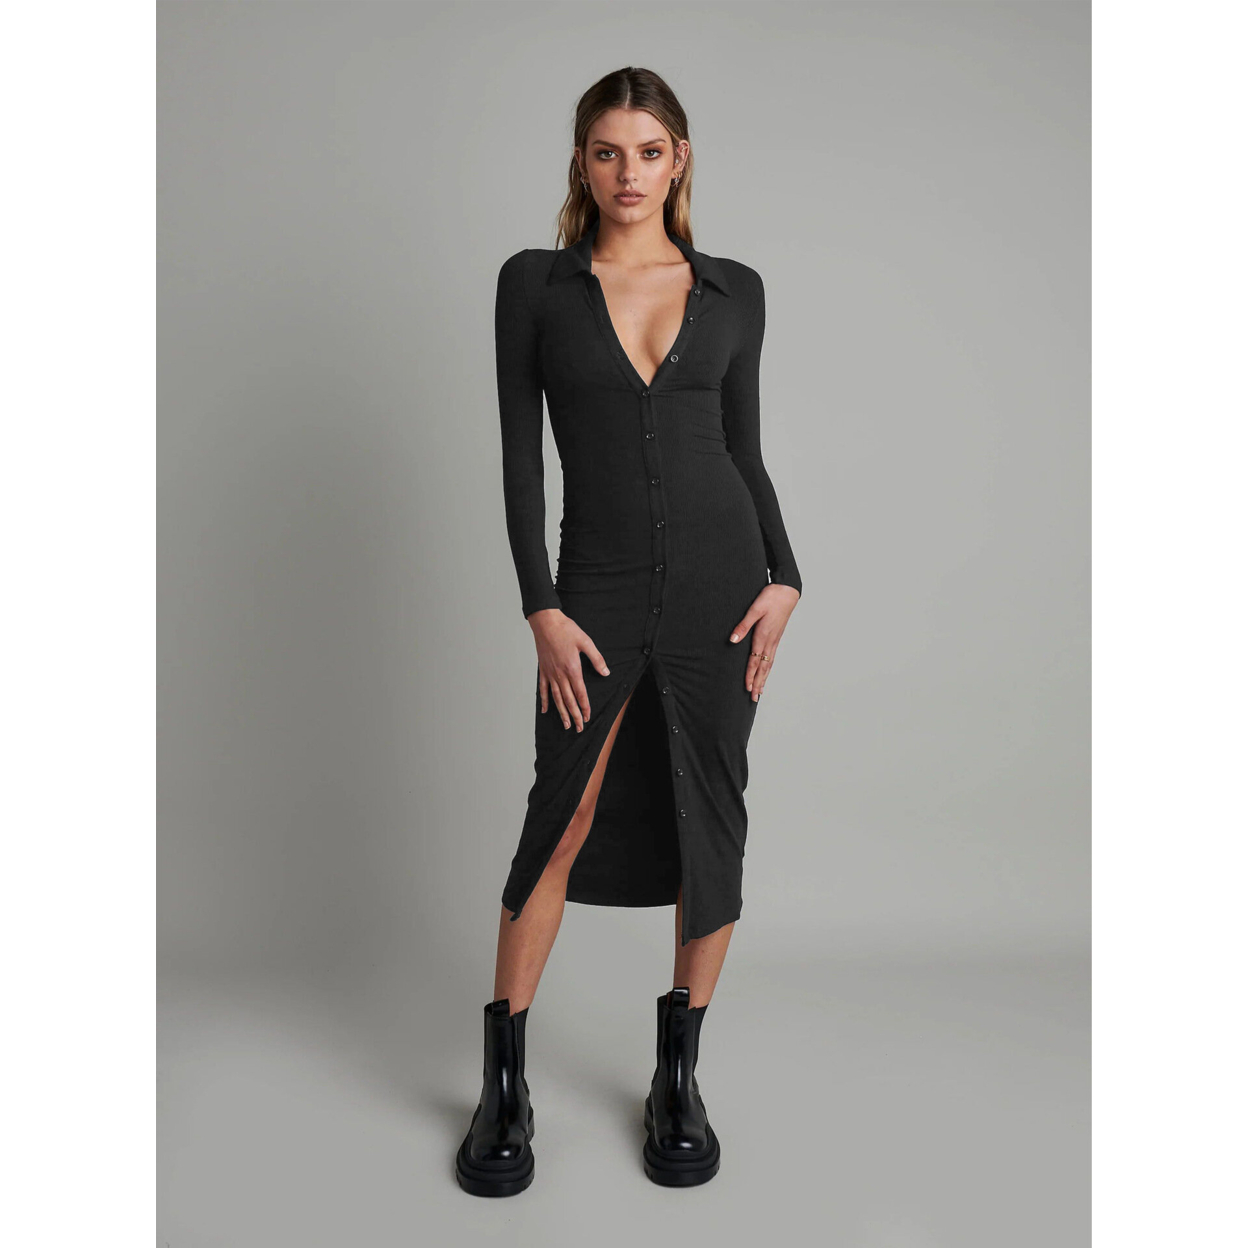 Sexy Fashion Cardigan Long Sleeve Shirt Skirt Women's Long Dress - Black, Xl